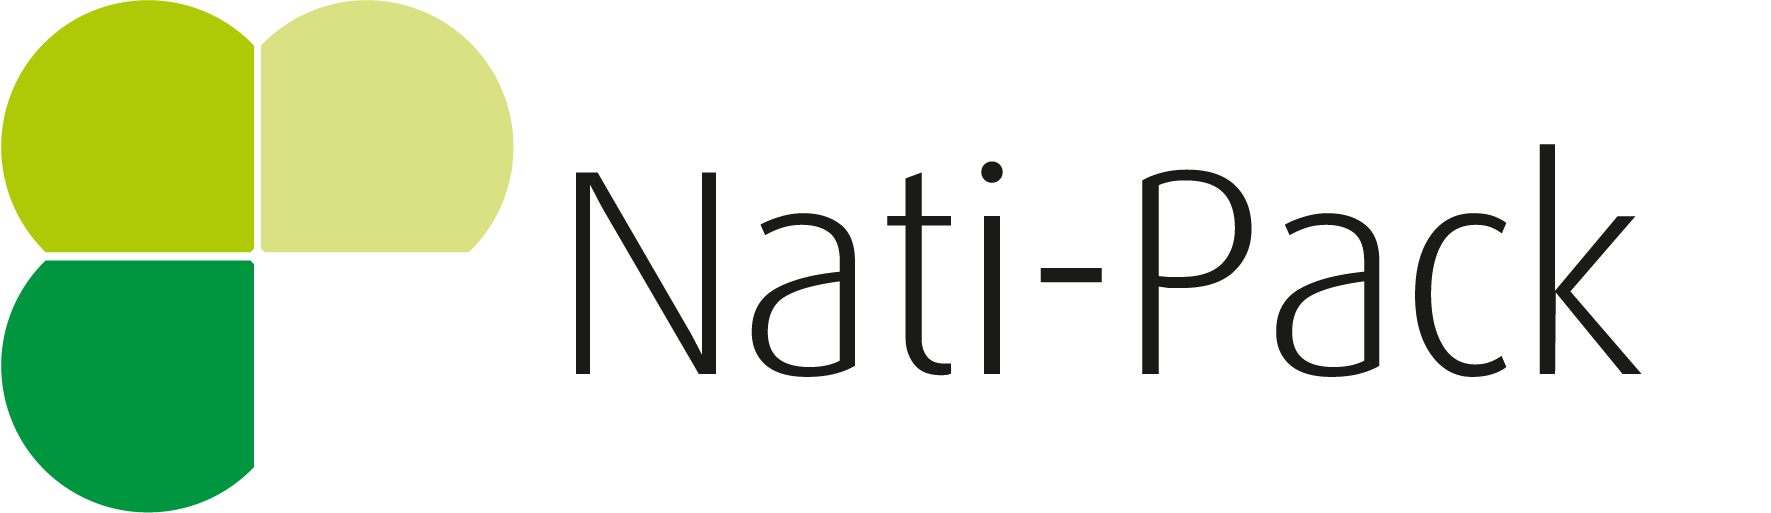 NatiPack logó